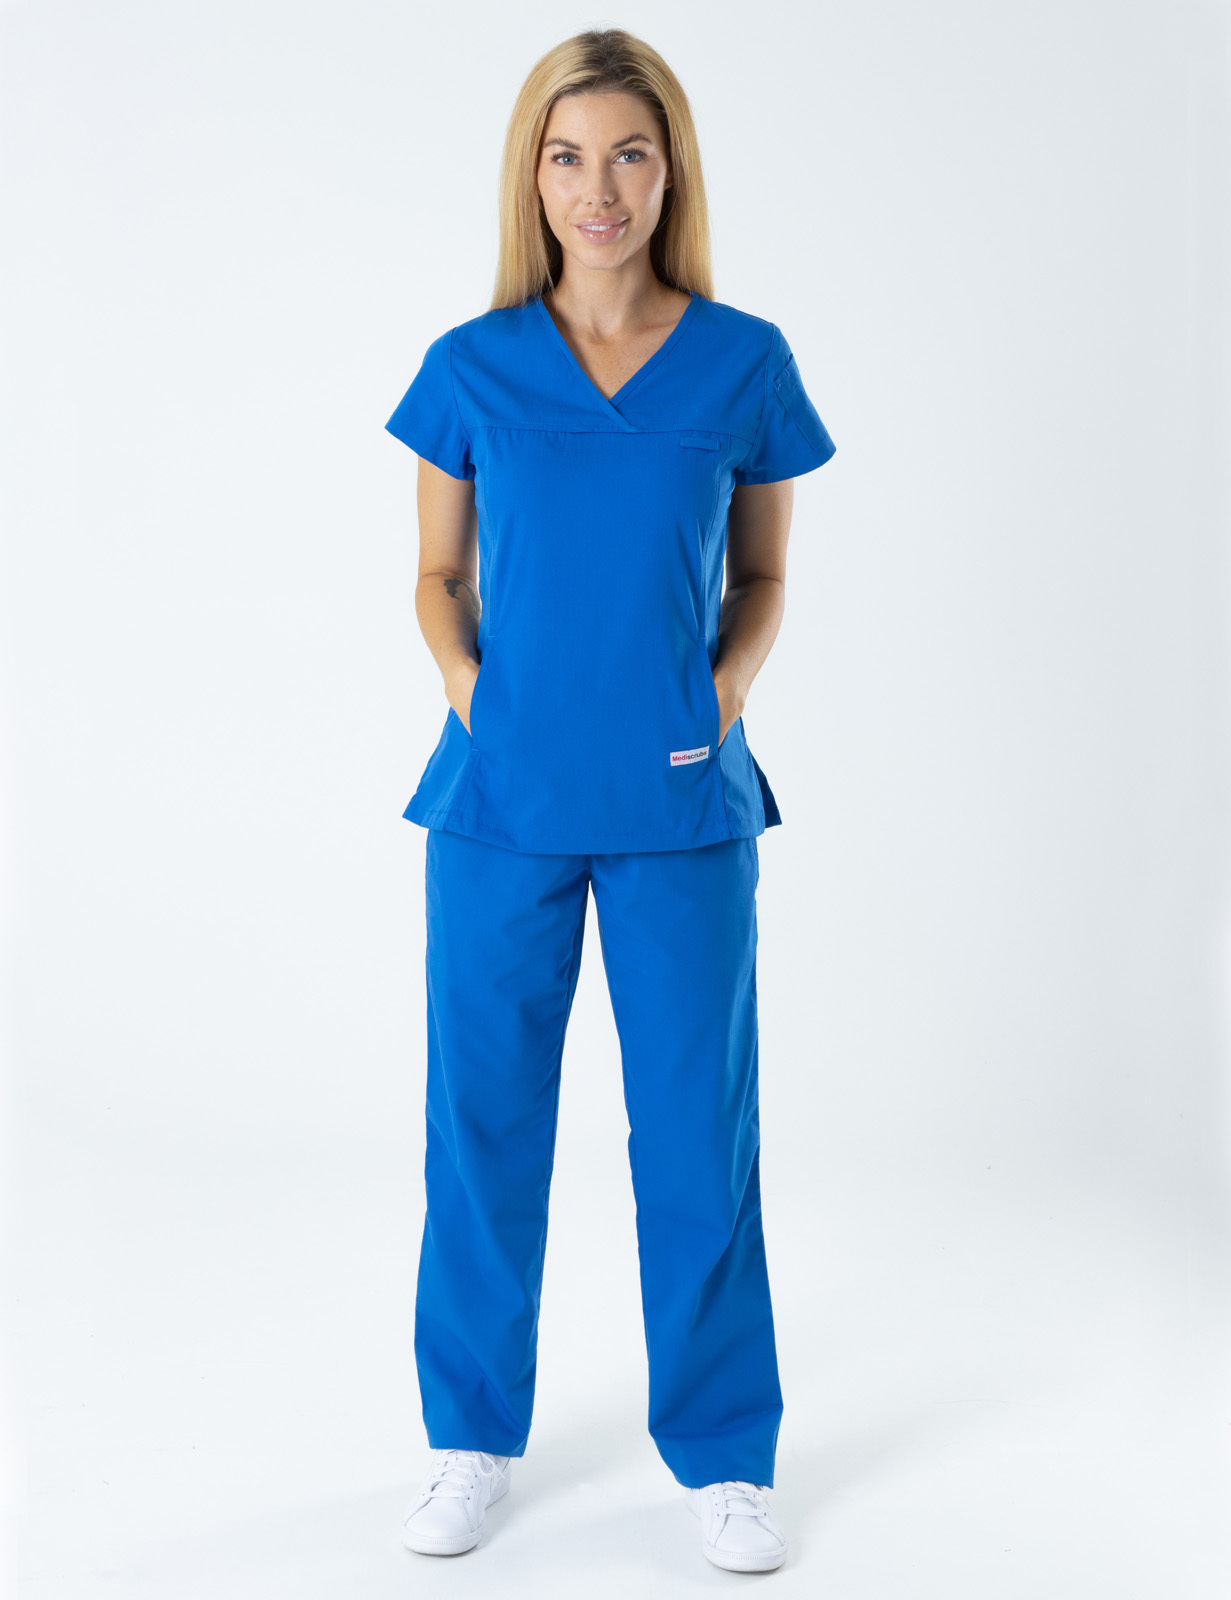 Biloela Hospital Healthcare Department Uniform Set Bundle (Women's Fit Solid Top and Cargo pants in Royal incl Logos)